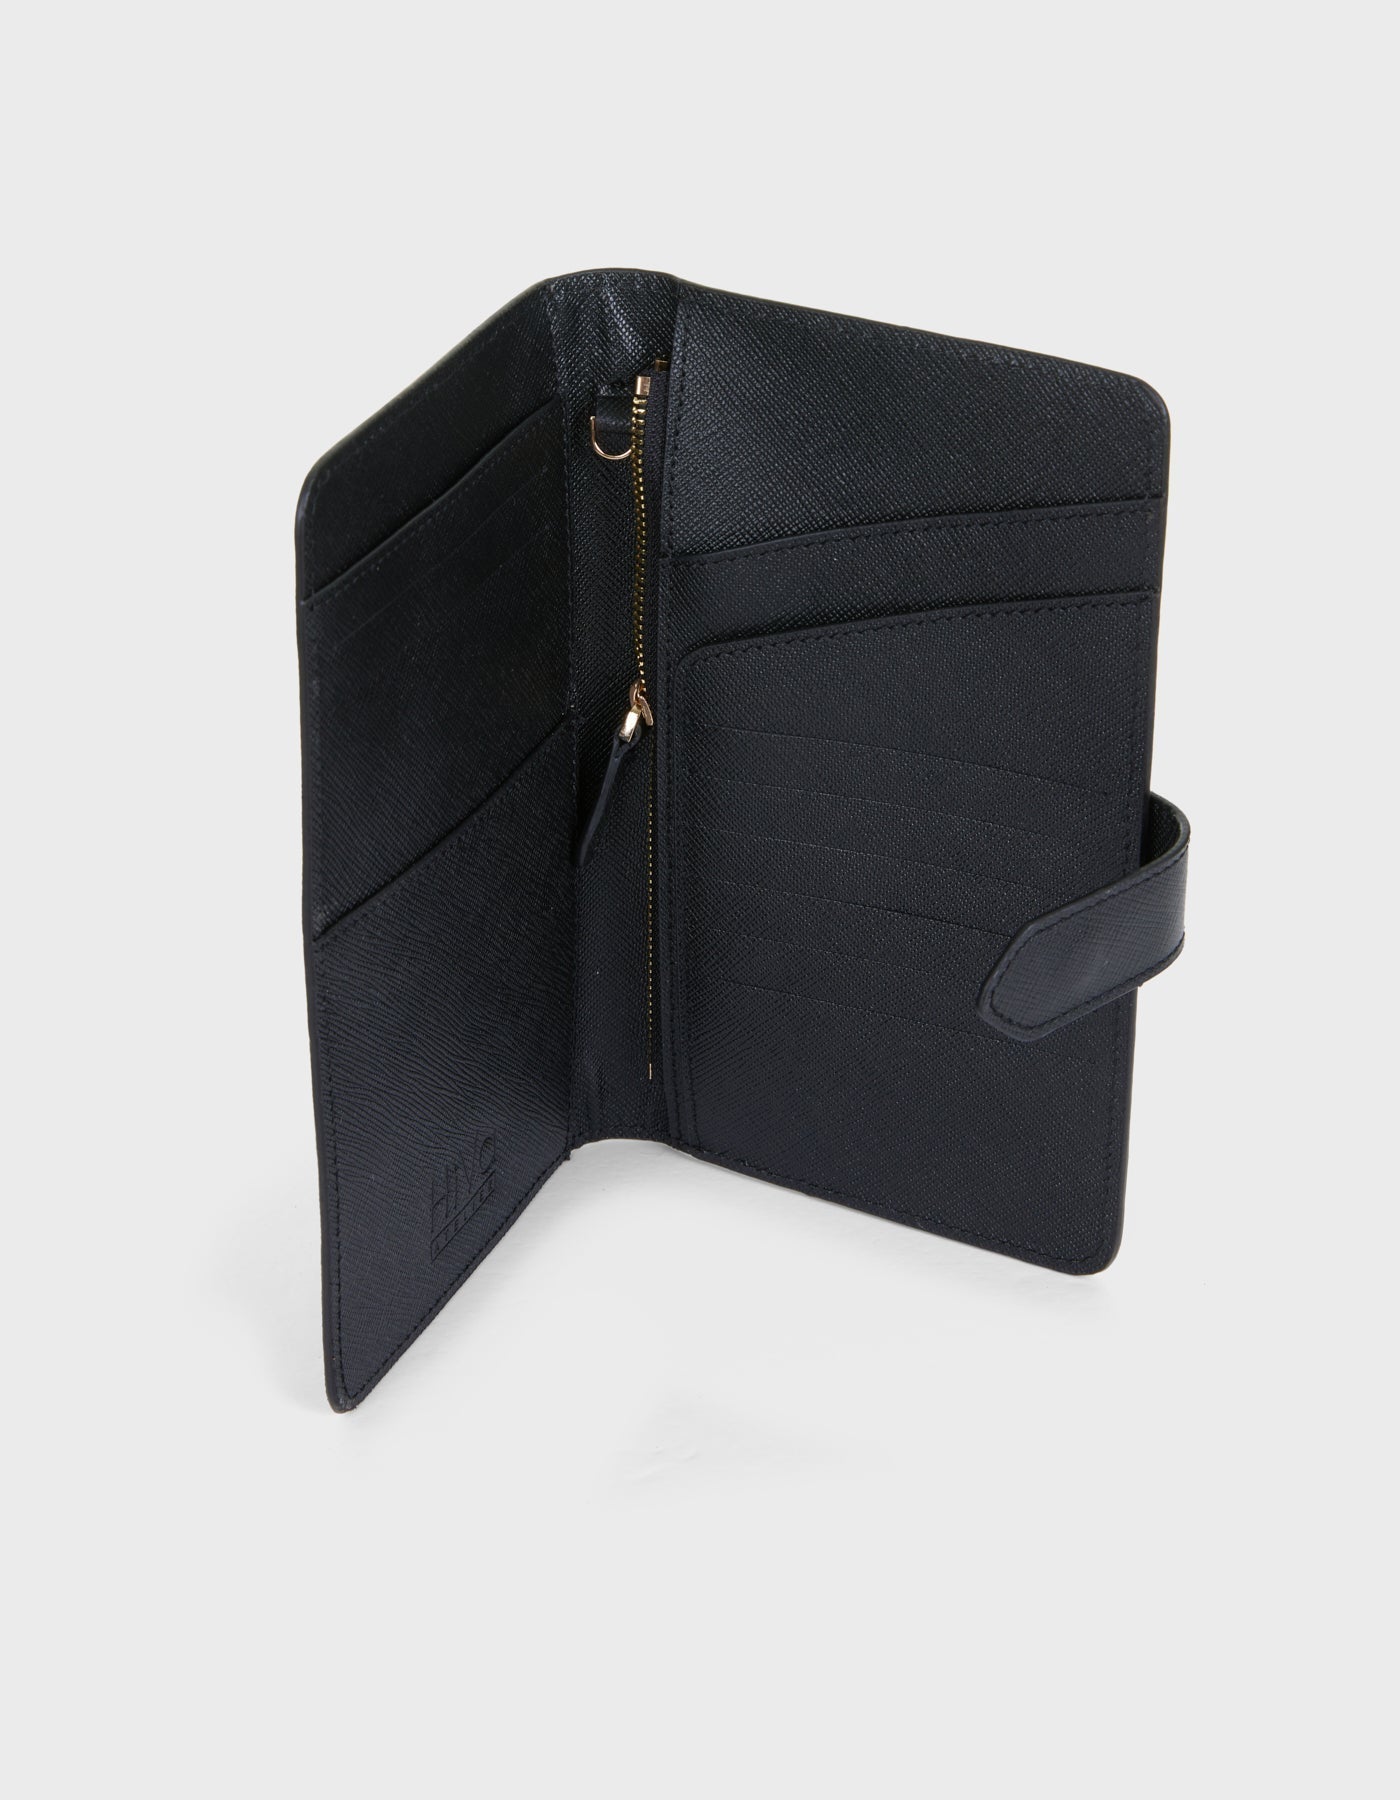 HiVa Atelier | Ita Crossbody Bag and Wallet Black | Beautiful and Versatile